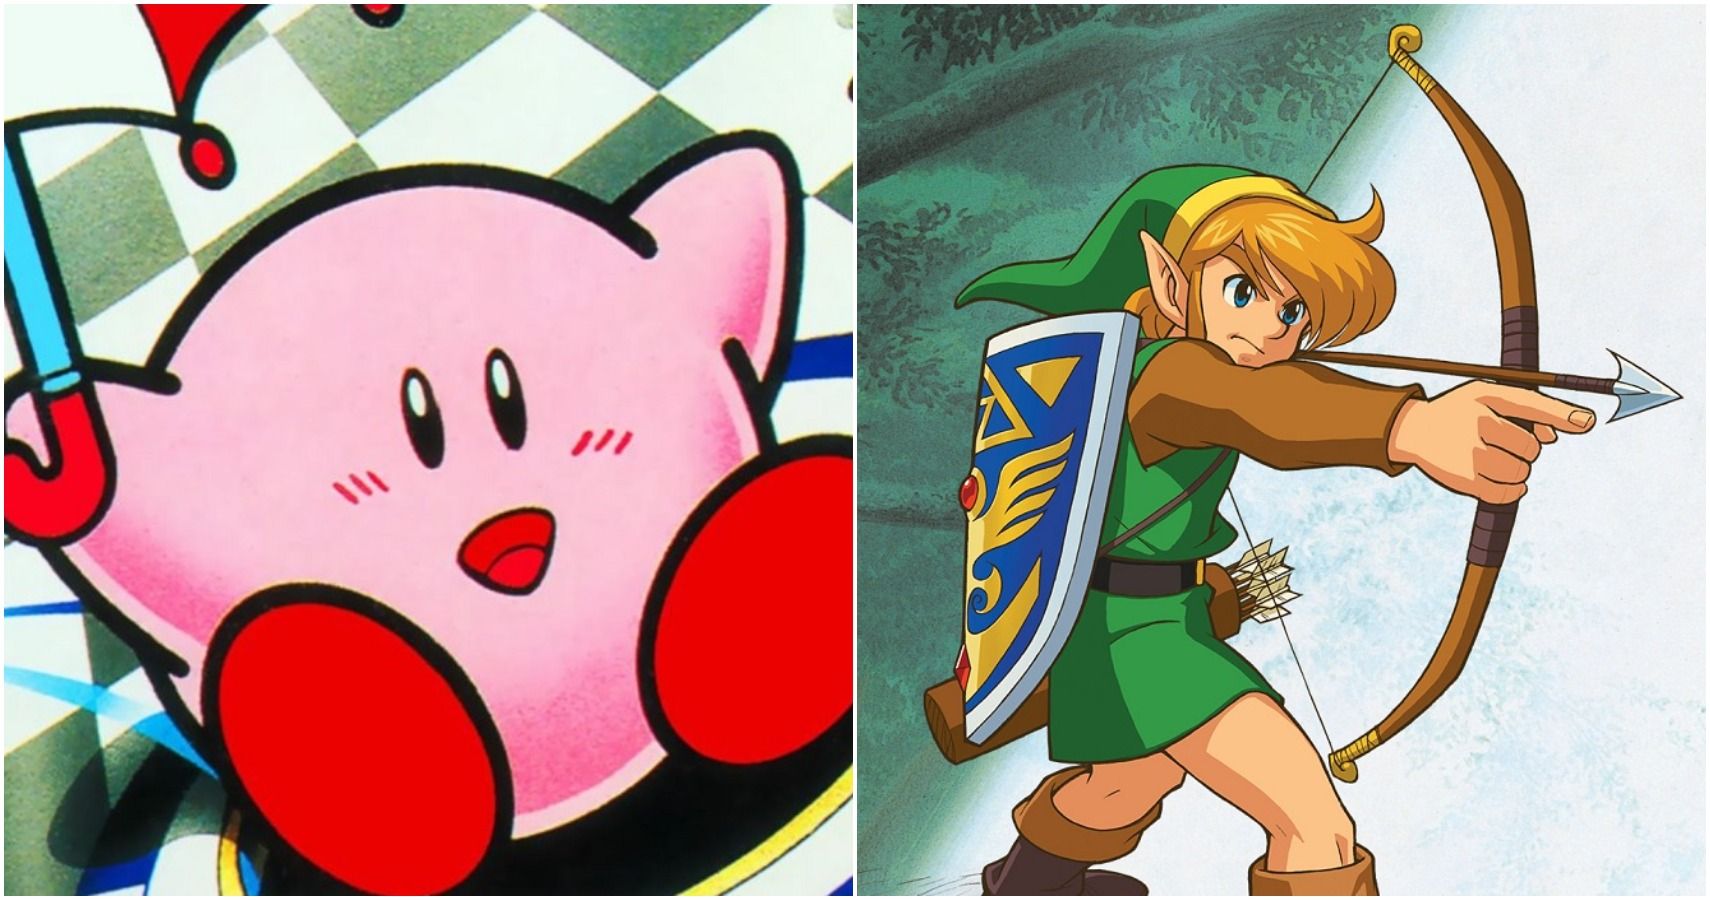 15 Best SNES Games On Nintendo Switch Online